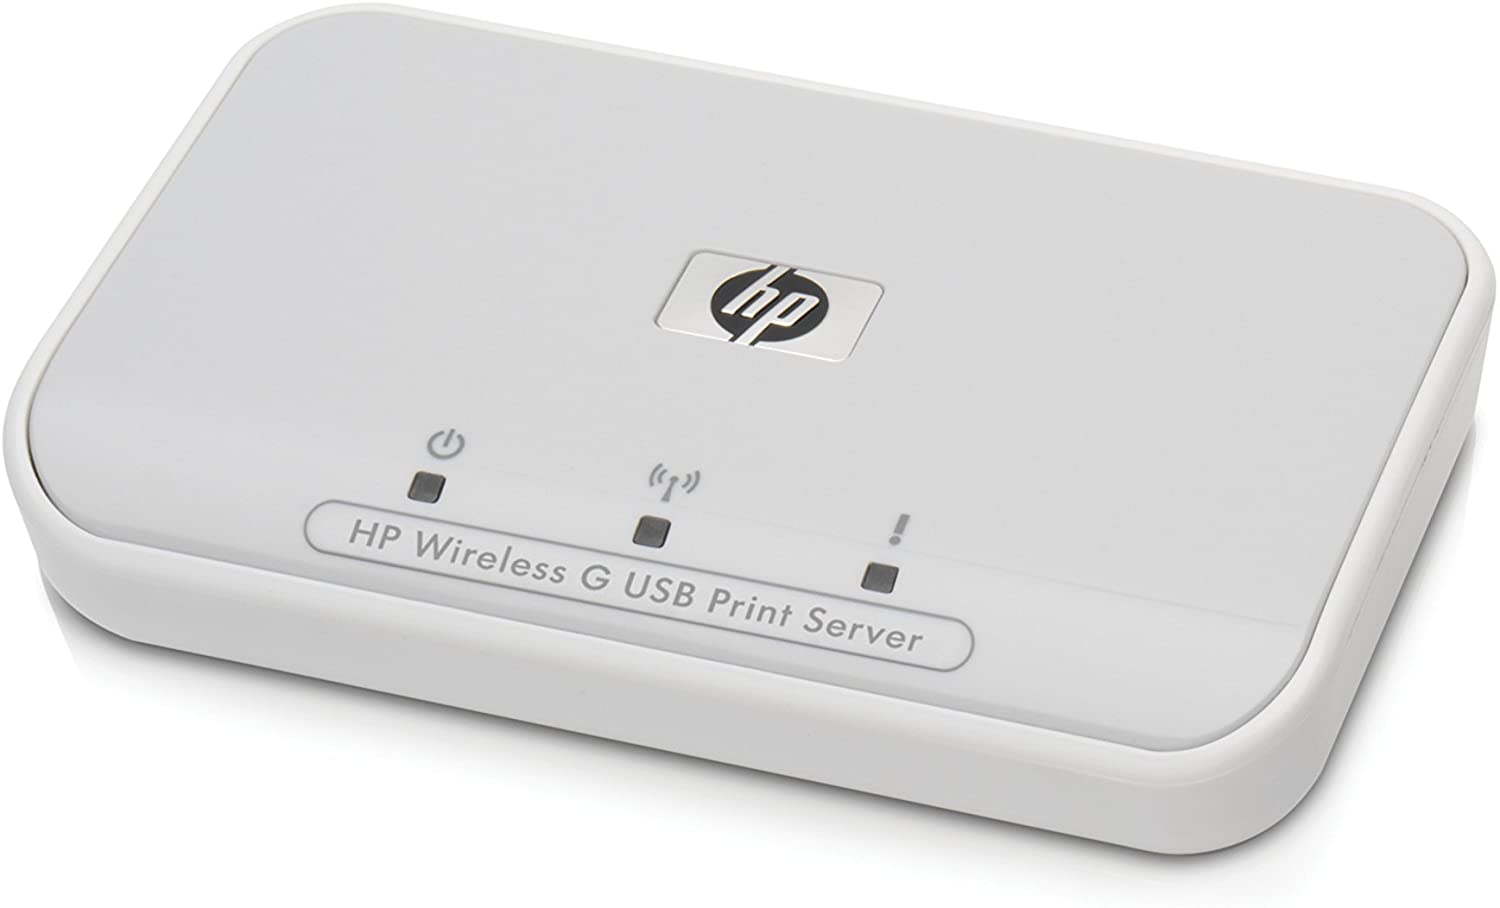 hp cellular g usb print server mac